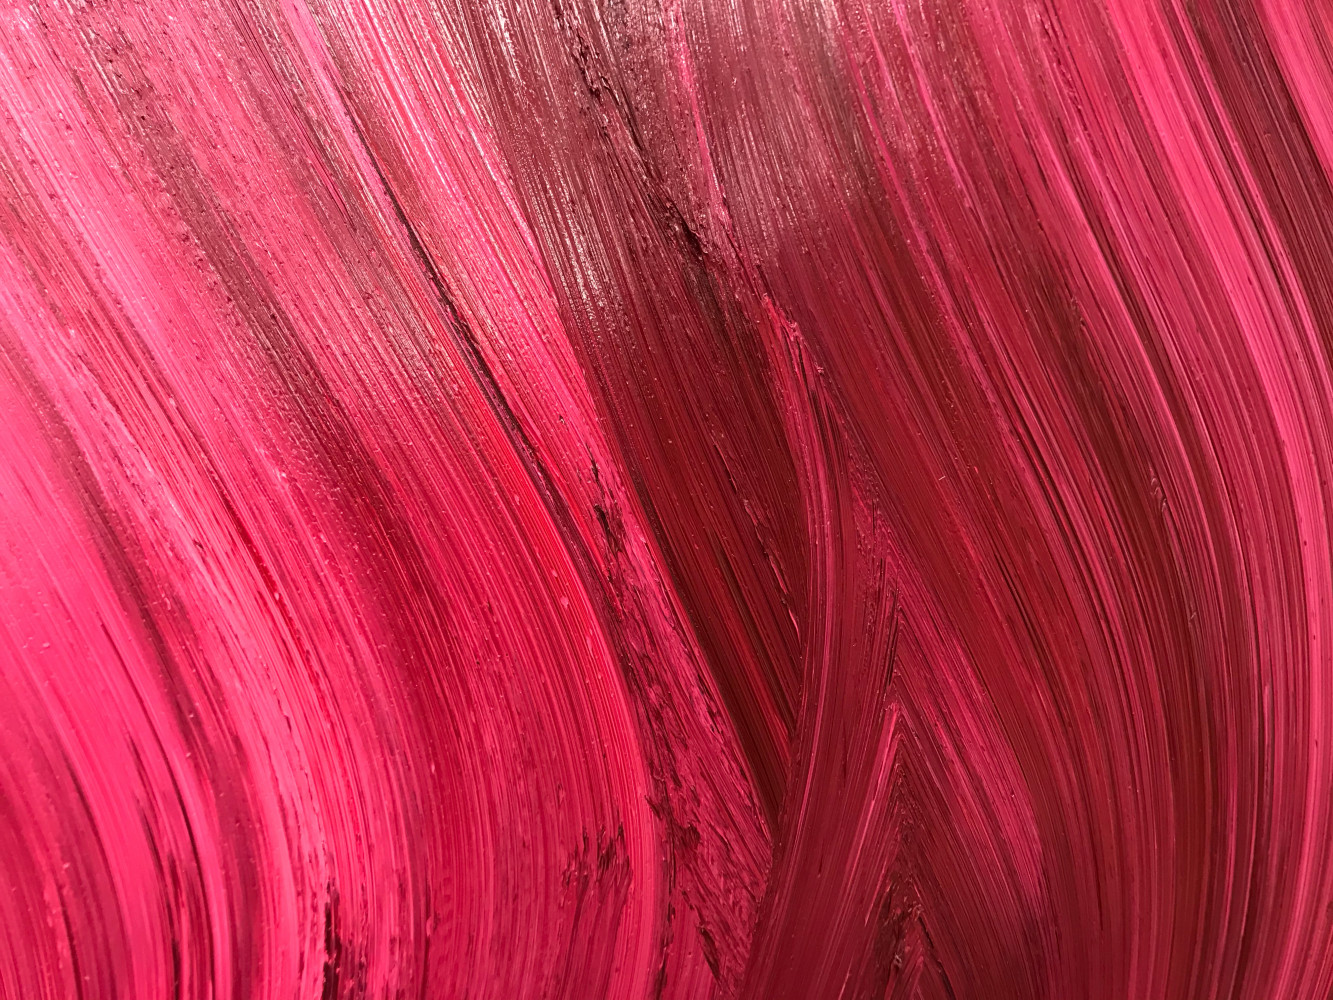 Jason Martin, ‘Untitled (Brilliant pink / Ideal rose) (detail)’, 2020, Oil on aluminium